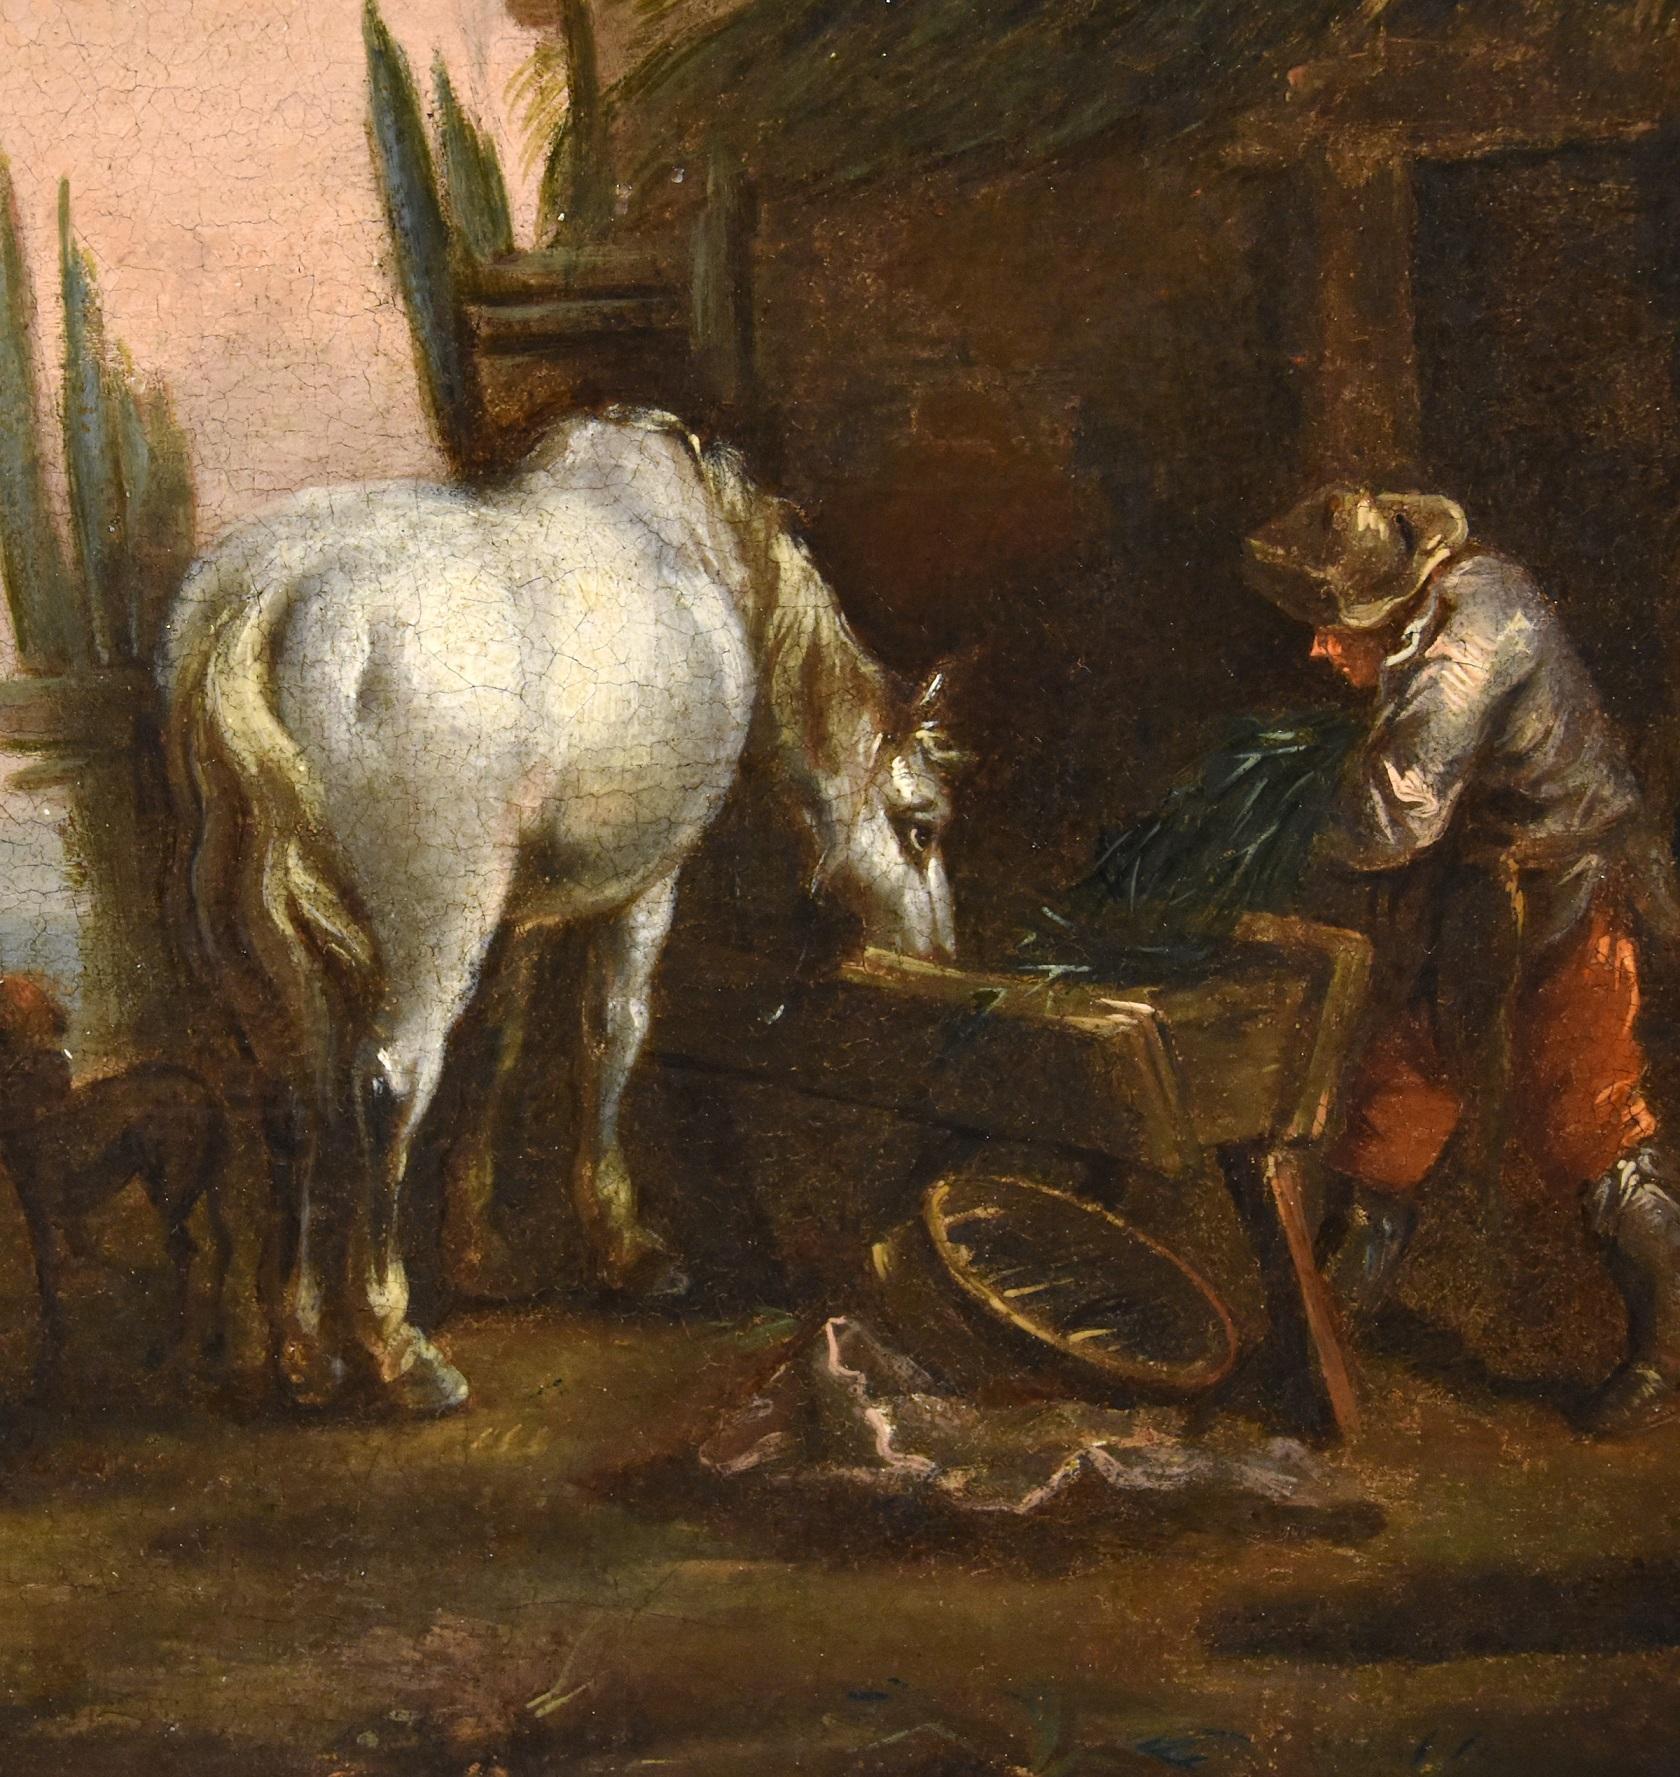 Knight Van Douw Paint Oil on canvas Old master 17/18th Century Flemish Art Italy For Sale 5